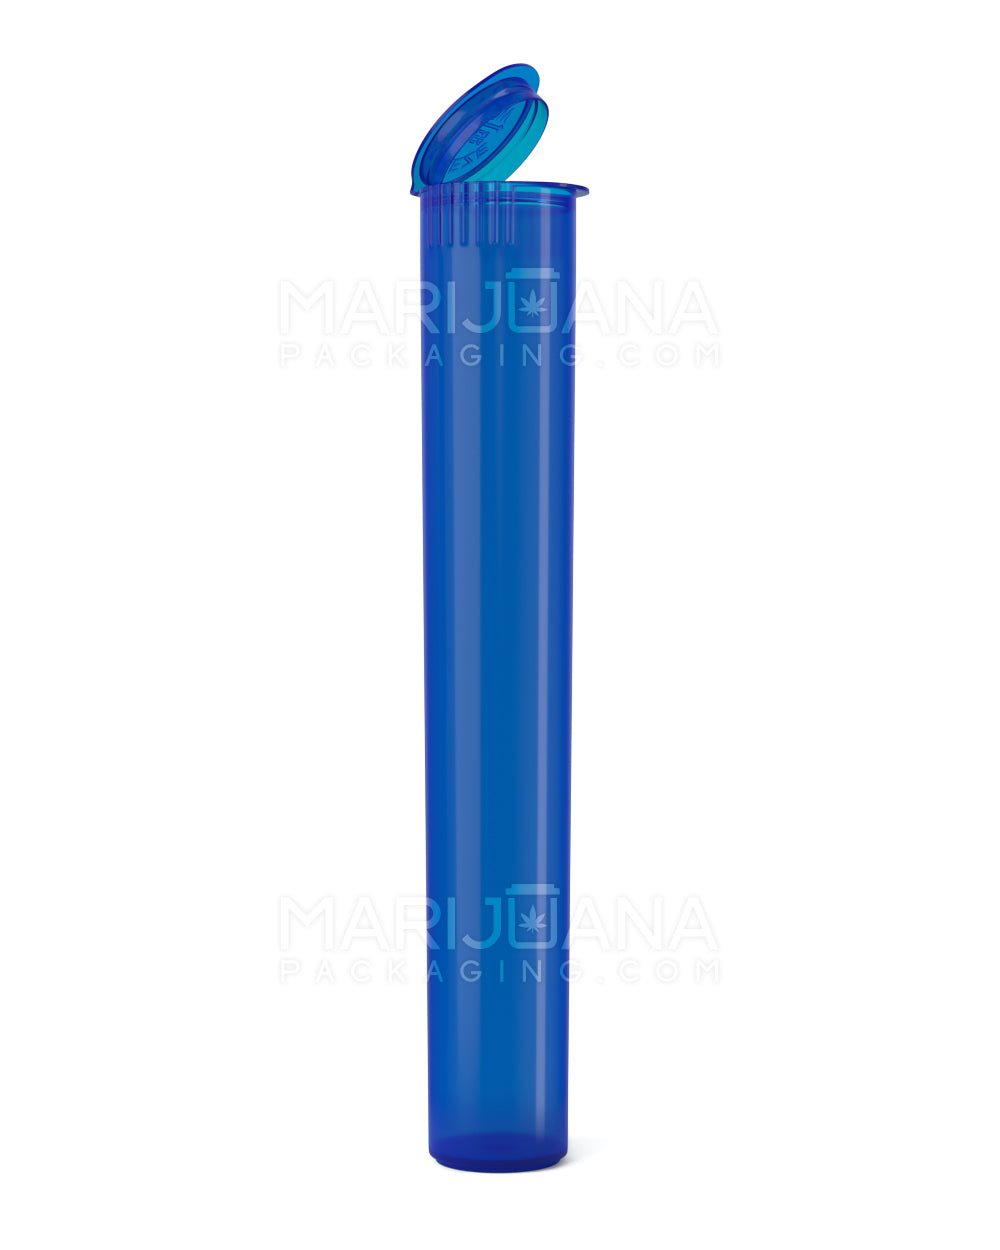 Child Resistant | King Size Pop Top Translucent Plastic Pre-Roll Tubes | 116mm - Blue - 1000 Count - 1